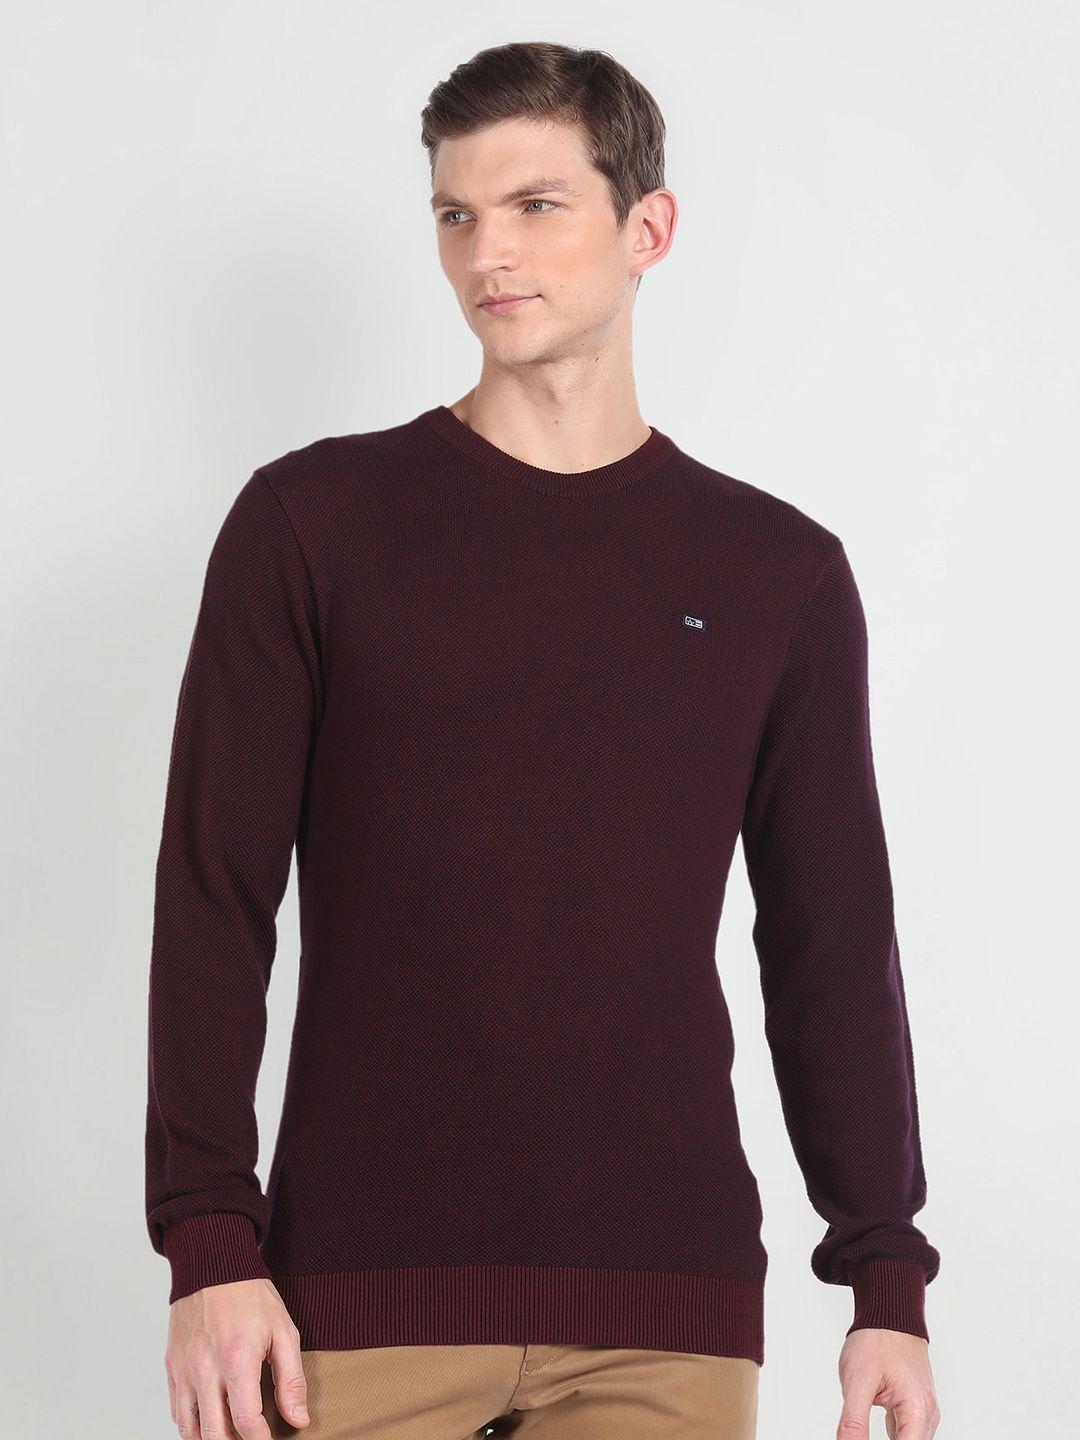 arrow sport round neck pullover sweater